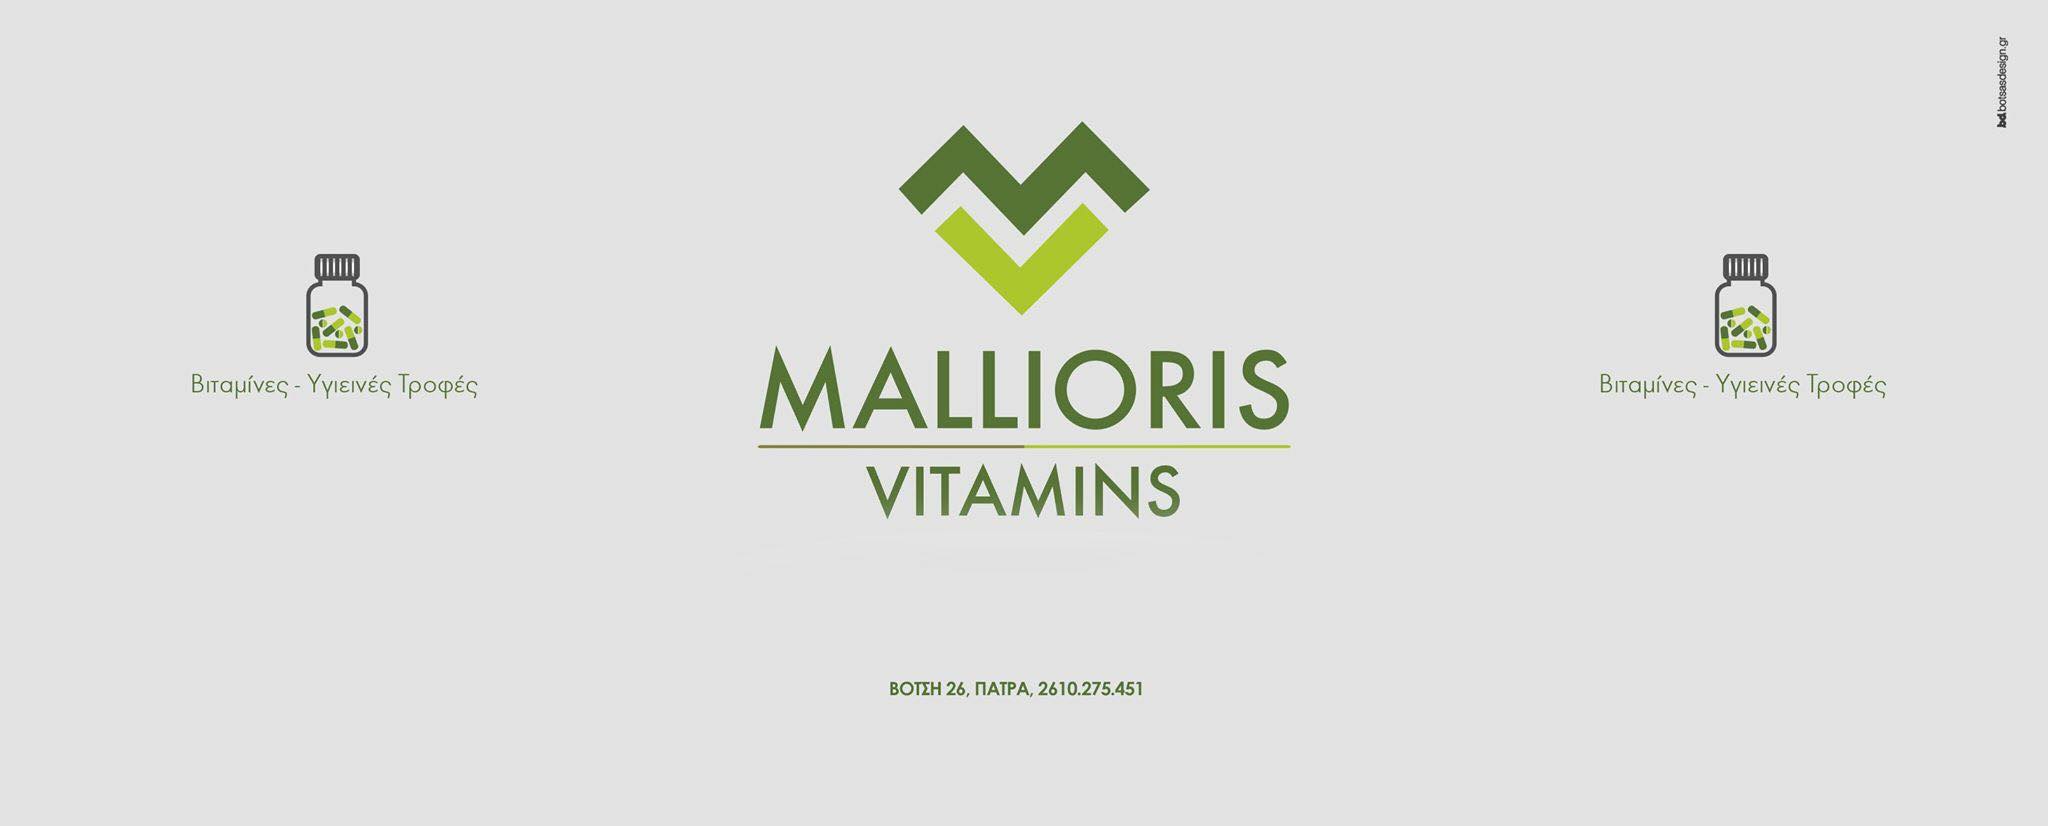 Mallioris Vitamins